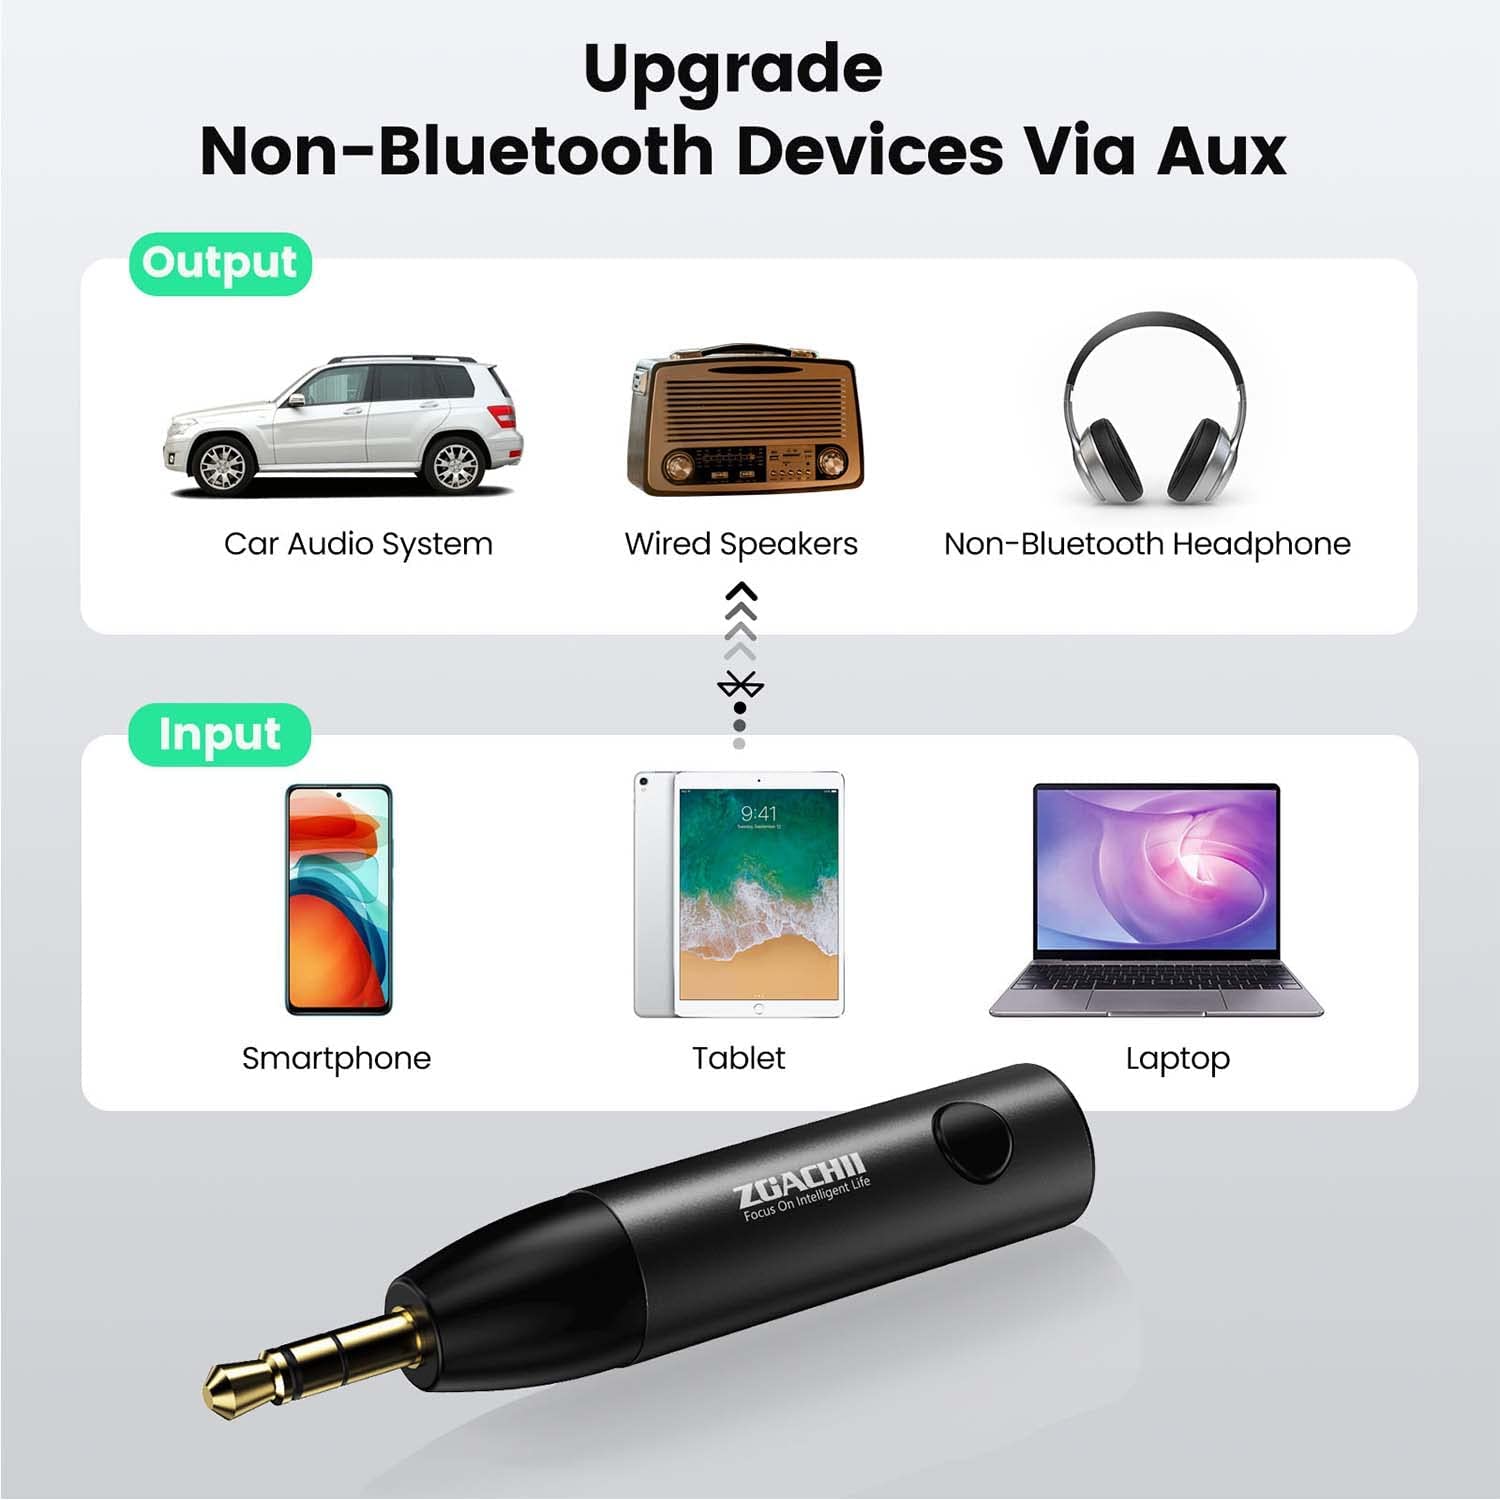 Bluetooth Aux Adapter for Car - ZOACHII Mini Wireless Audio